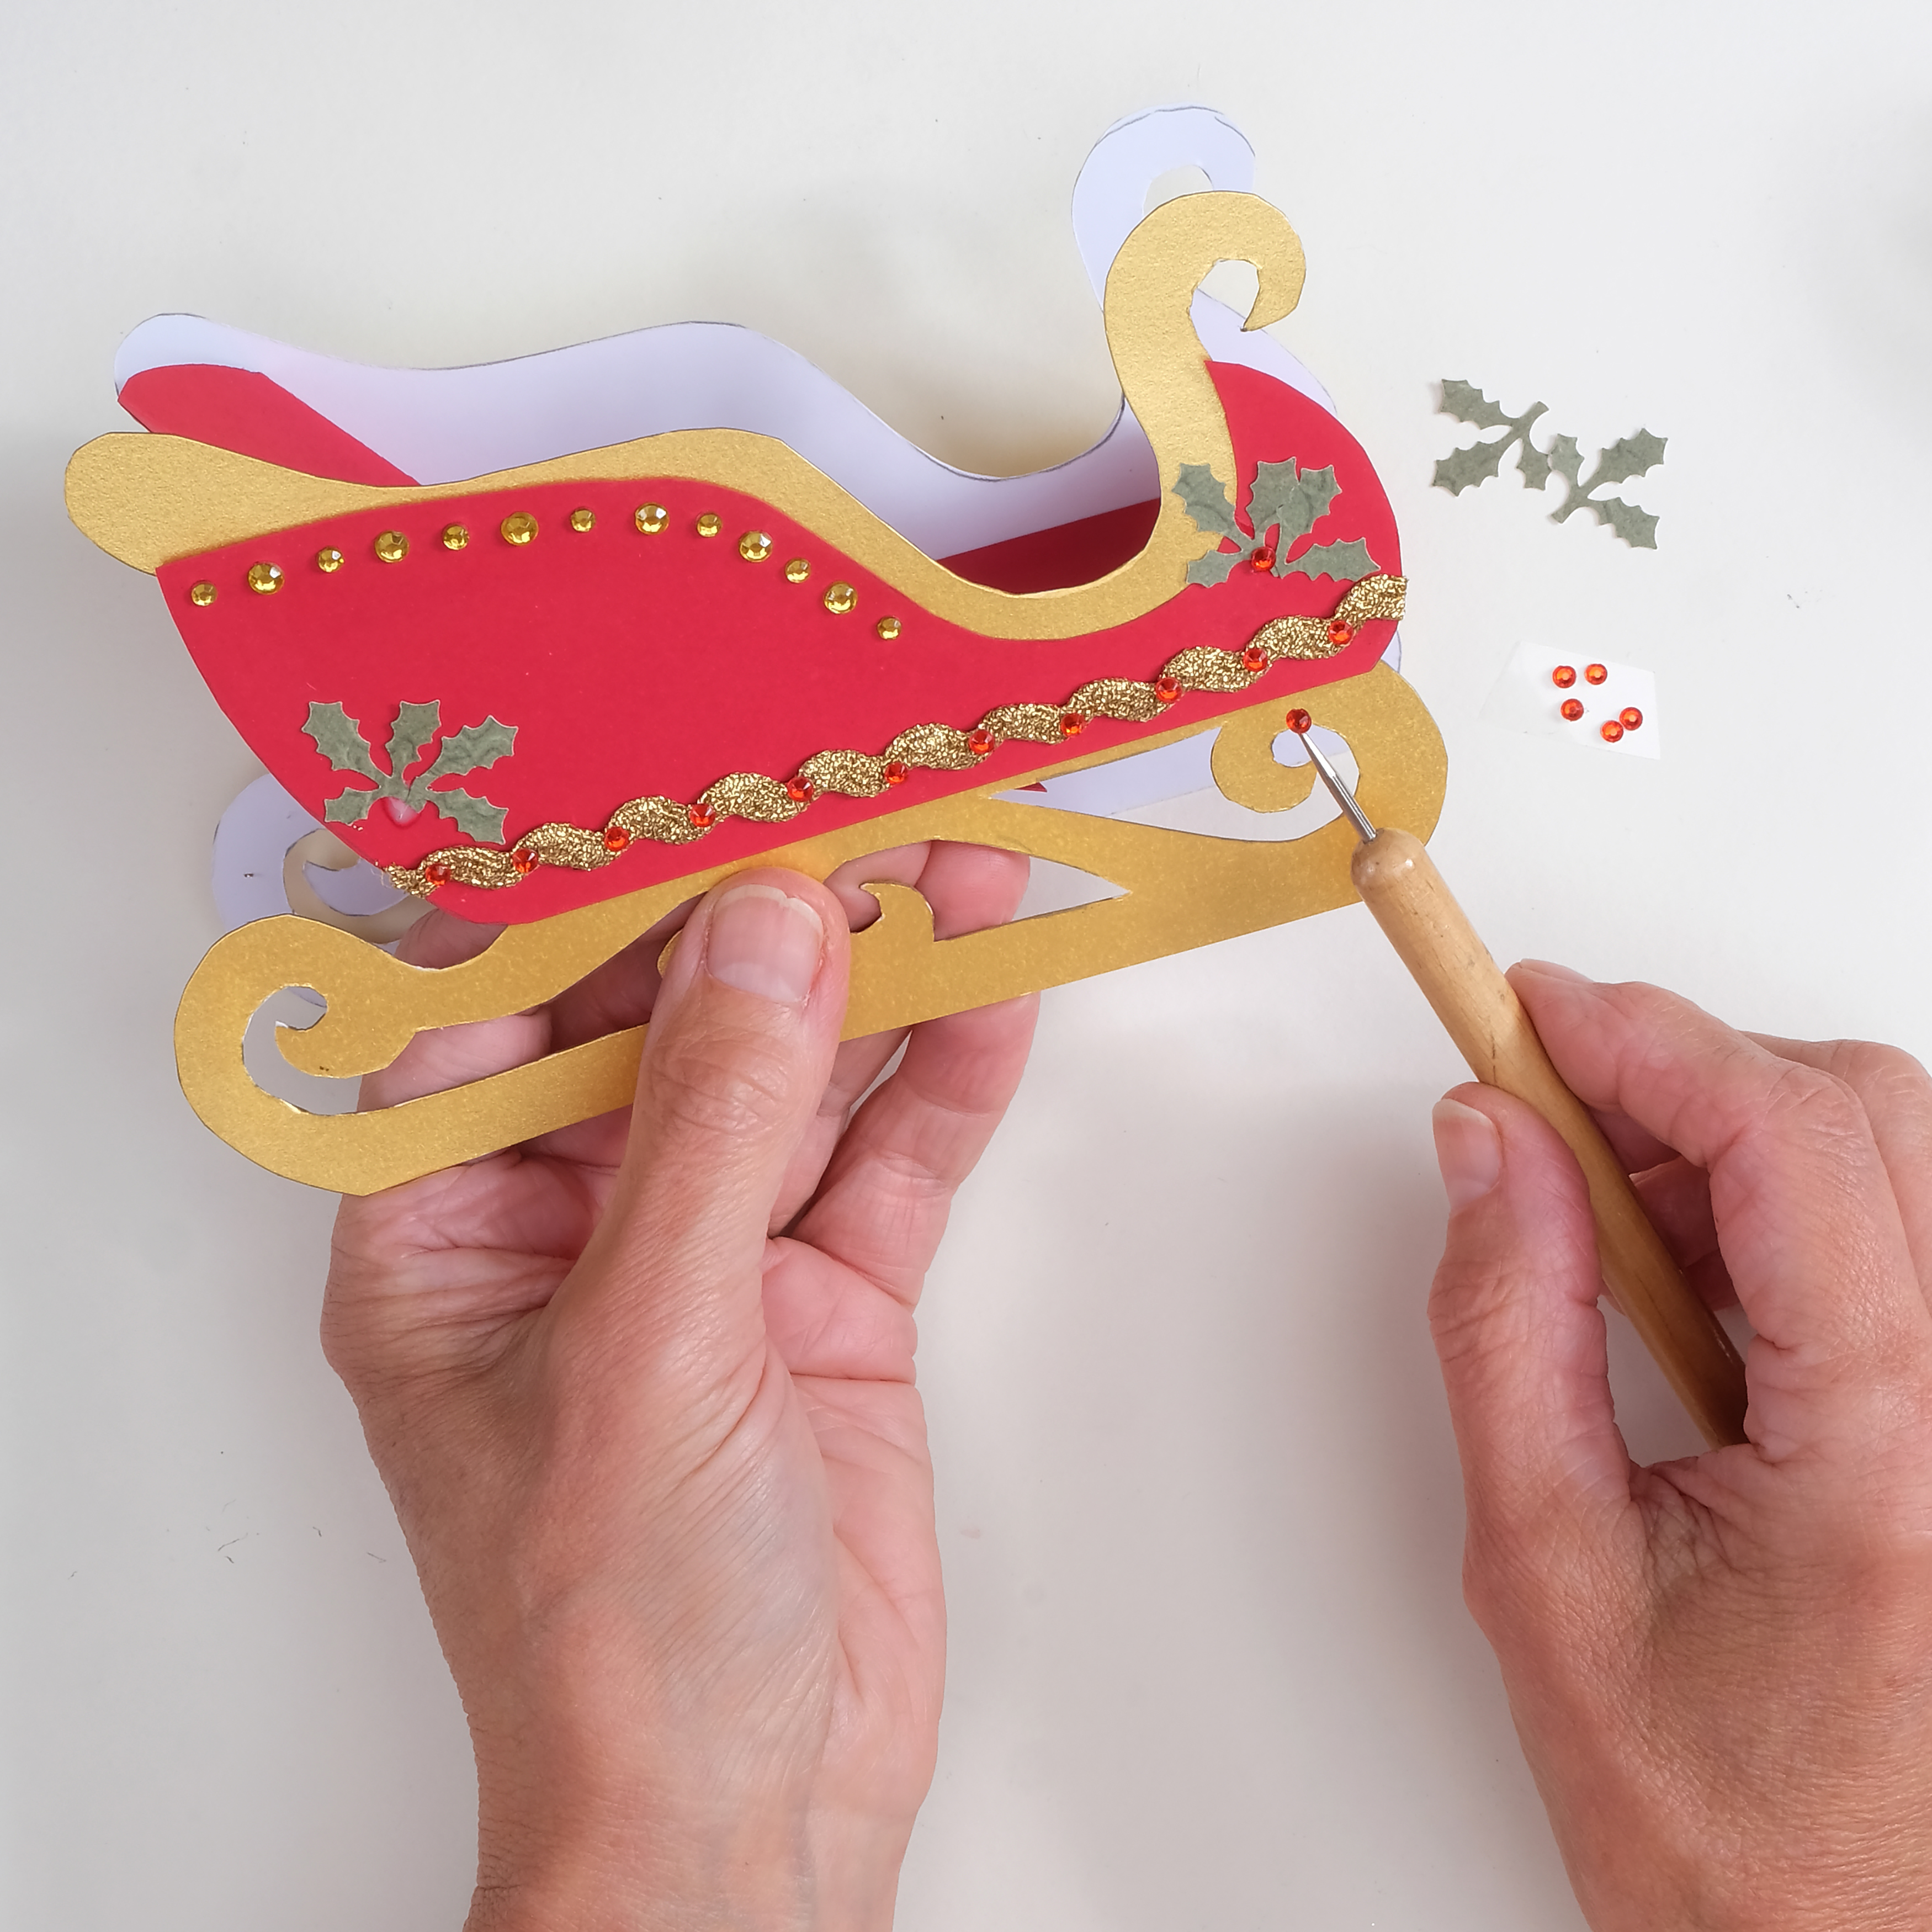 How to make Santa’s sleigh_06